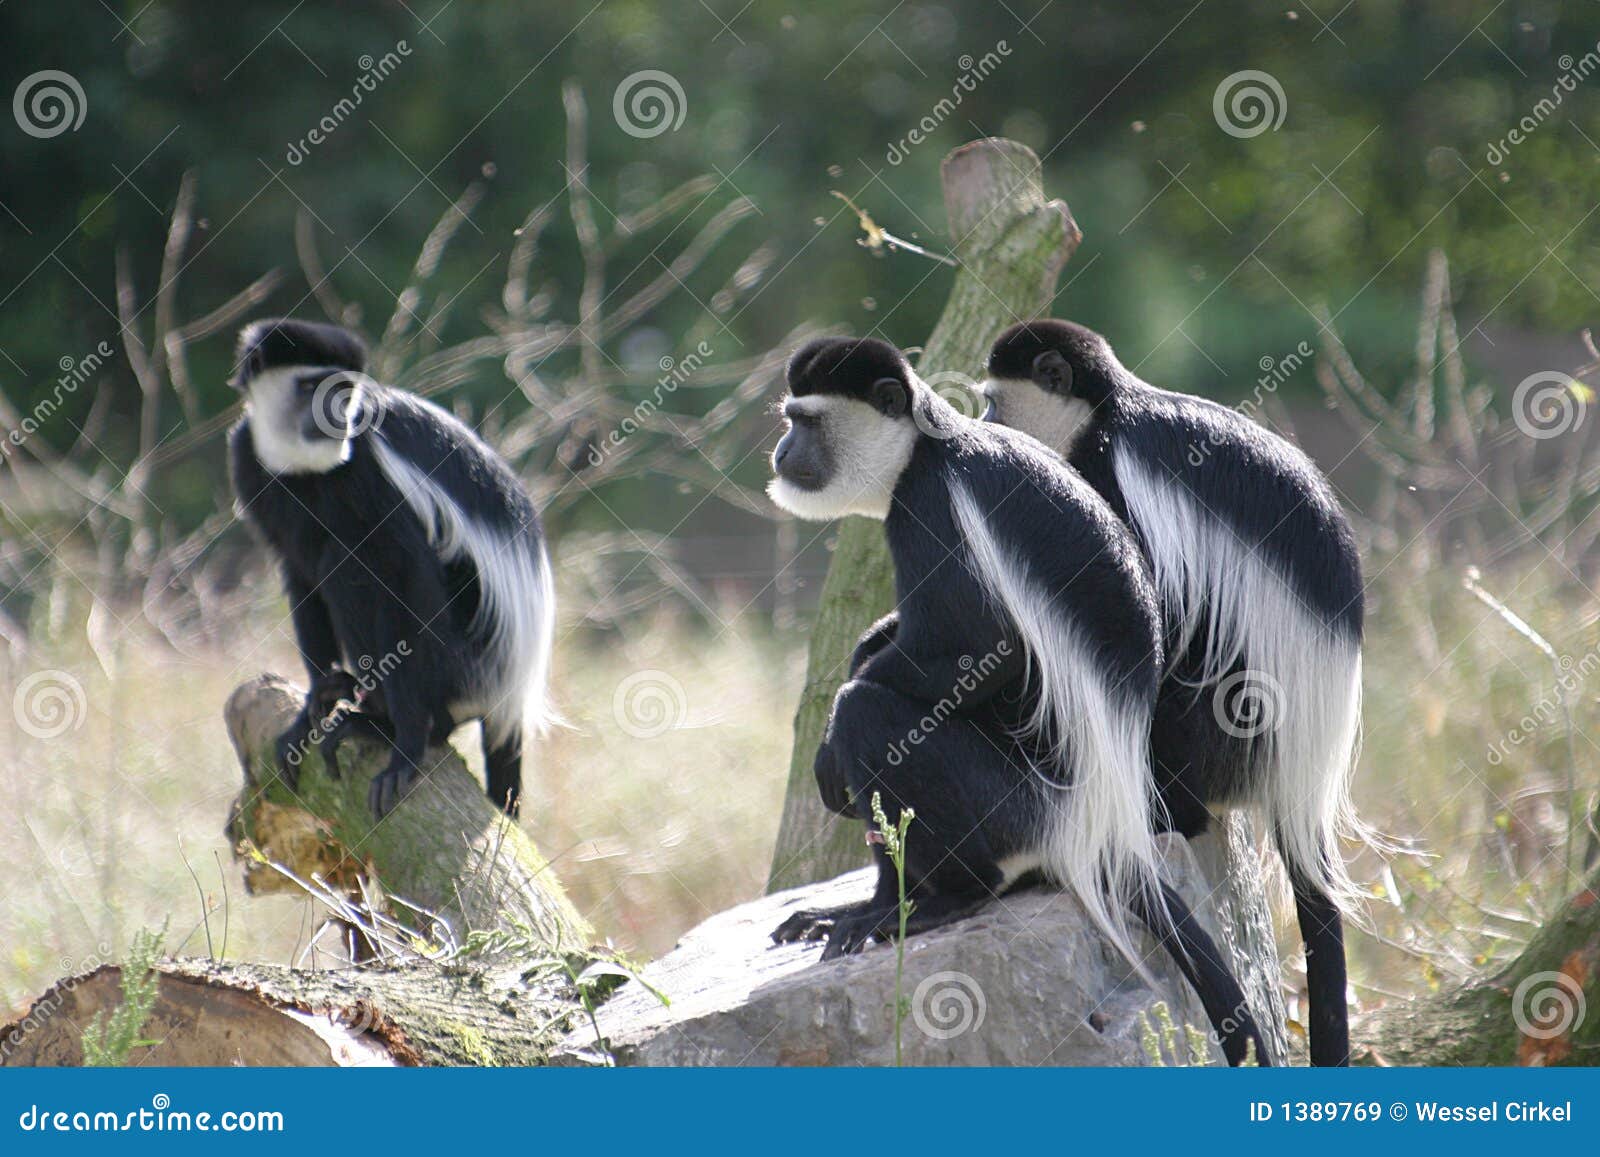 monkeys, named colobus guereza